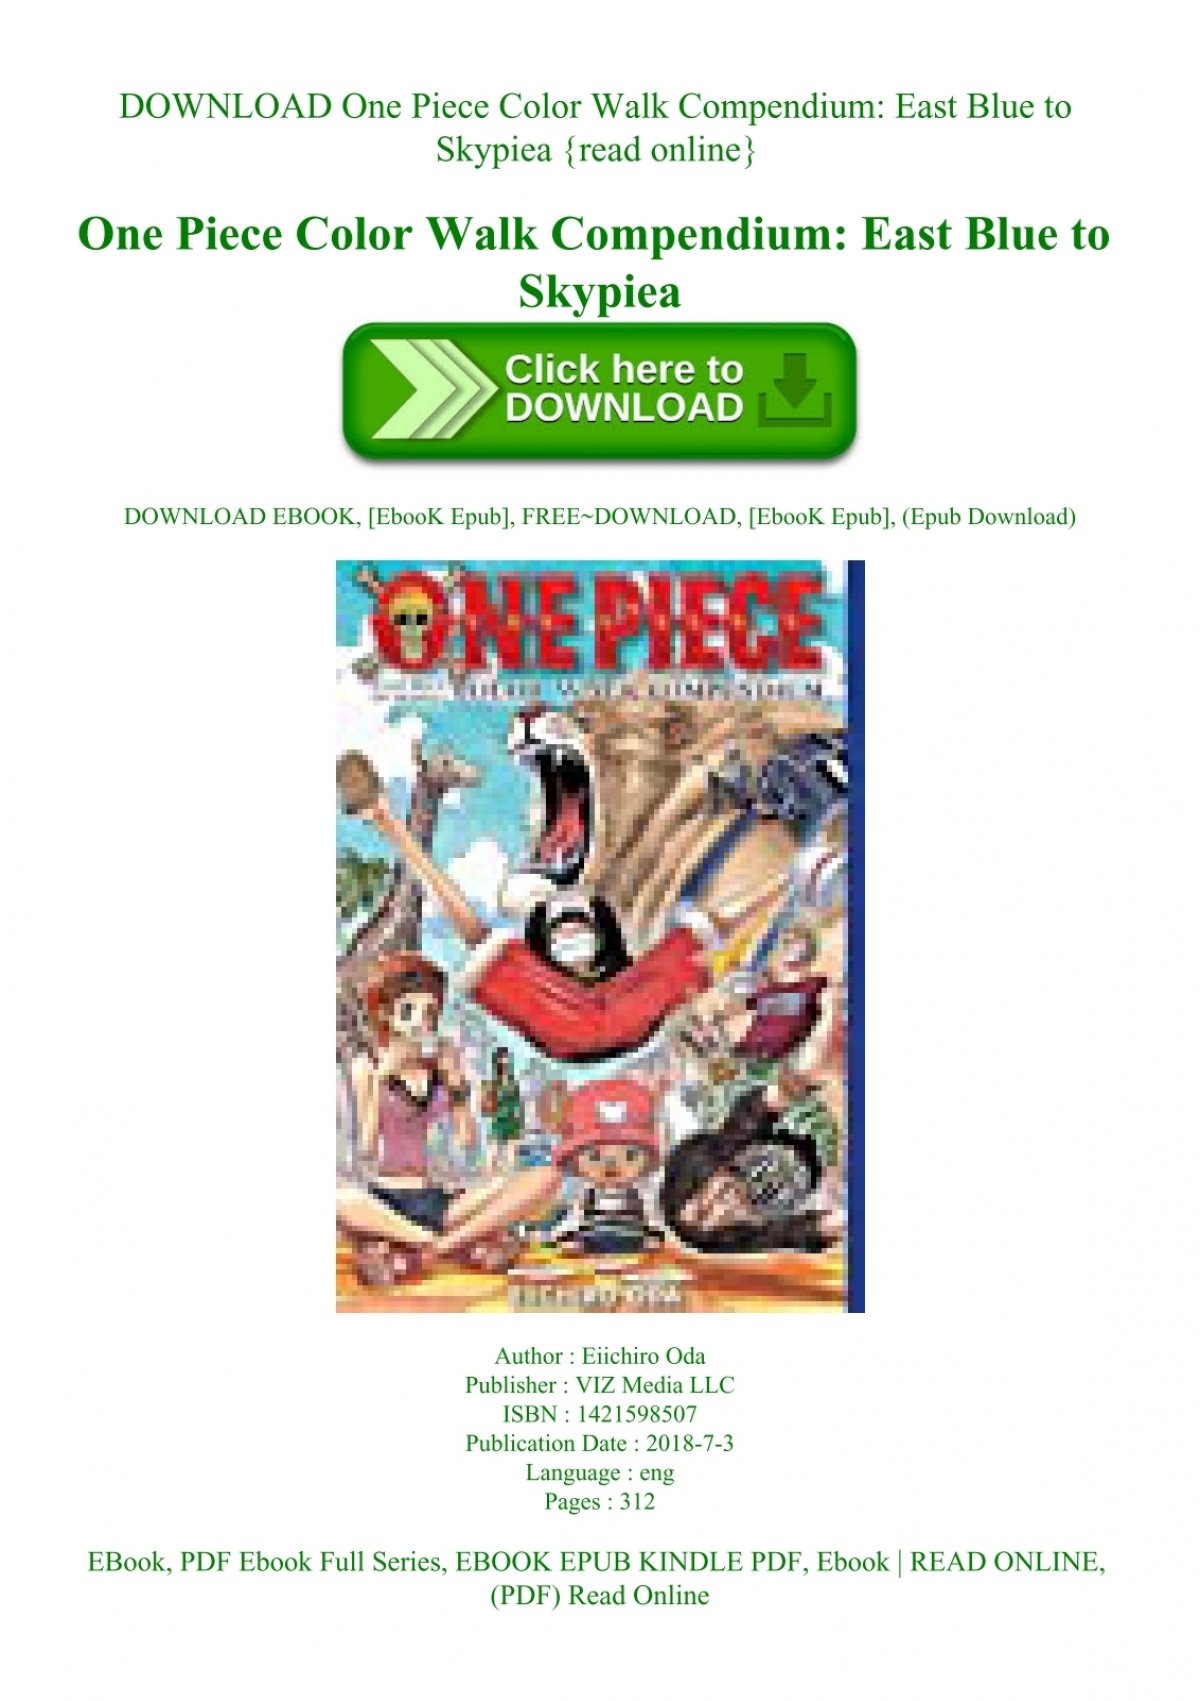 Download One Piece Color Walk Compendium East Blue To Skypiea Read Online